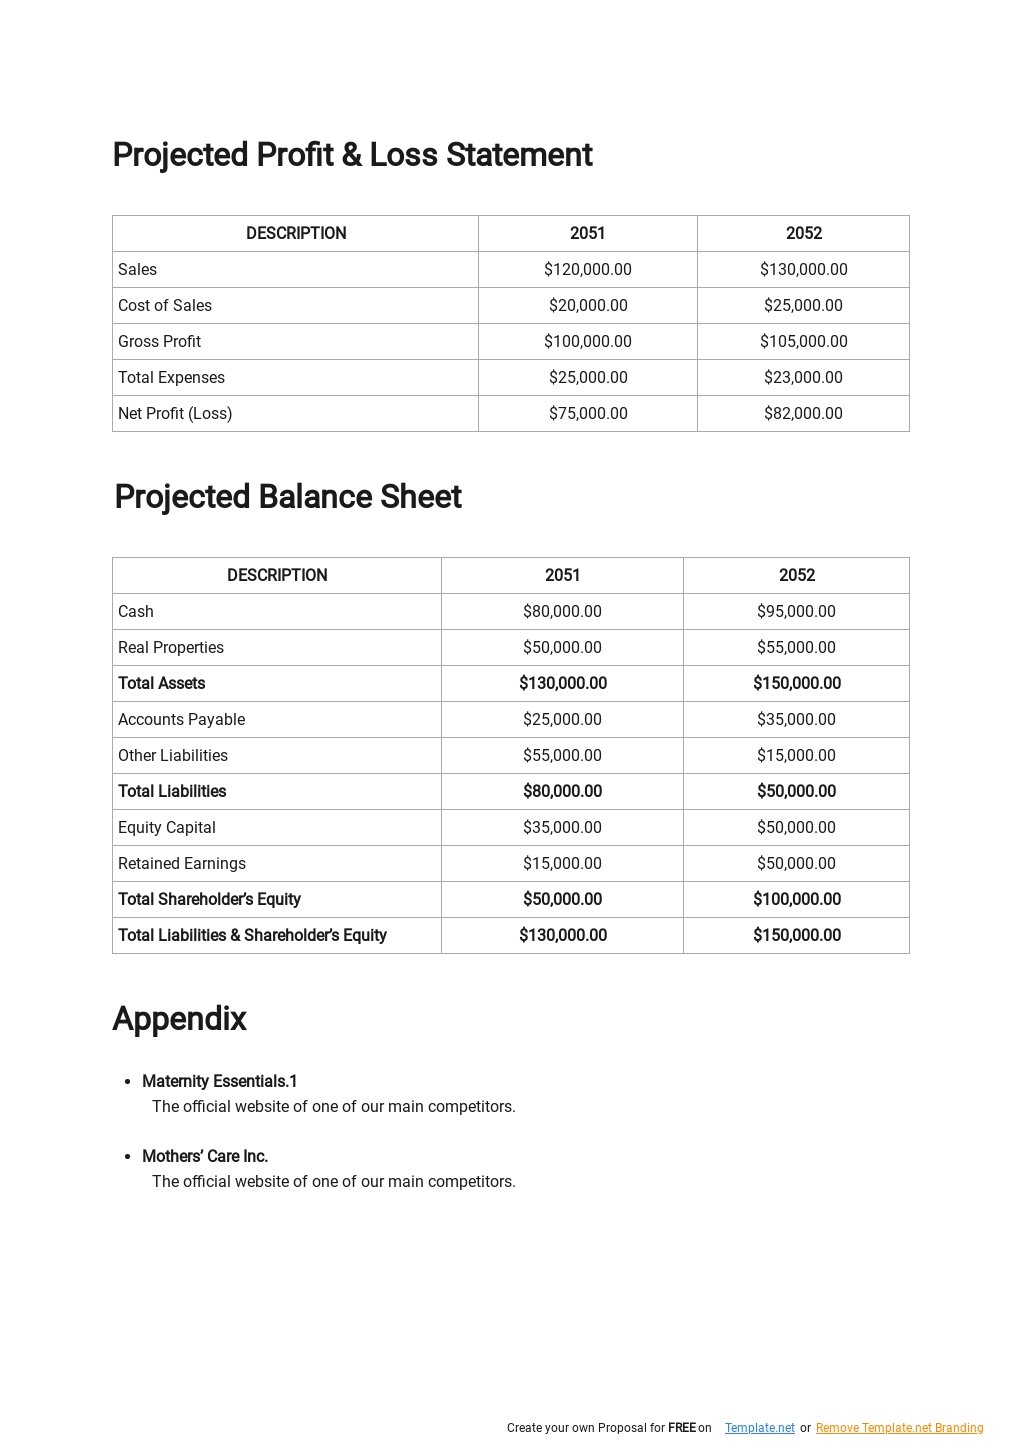 maternity home business plan pdf